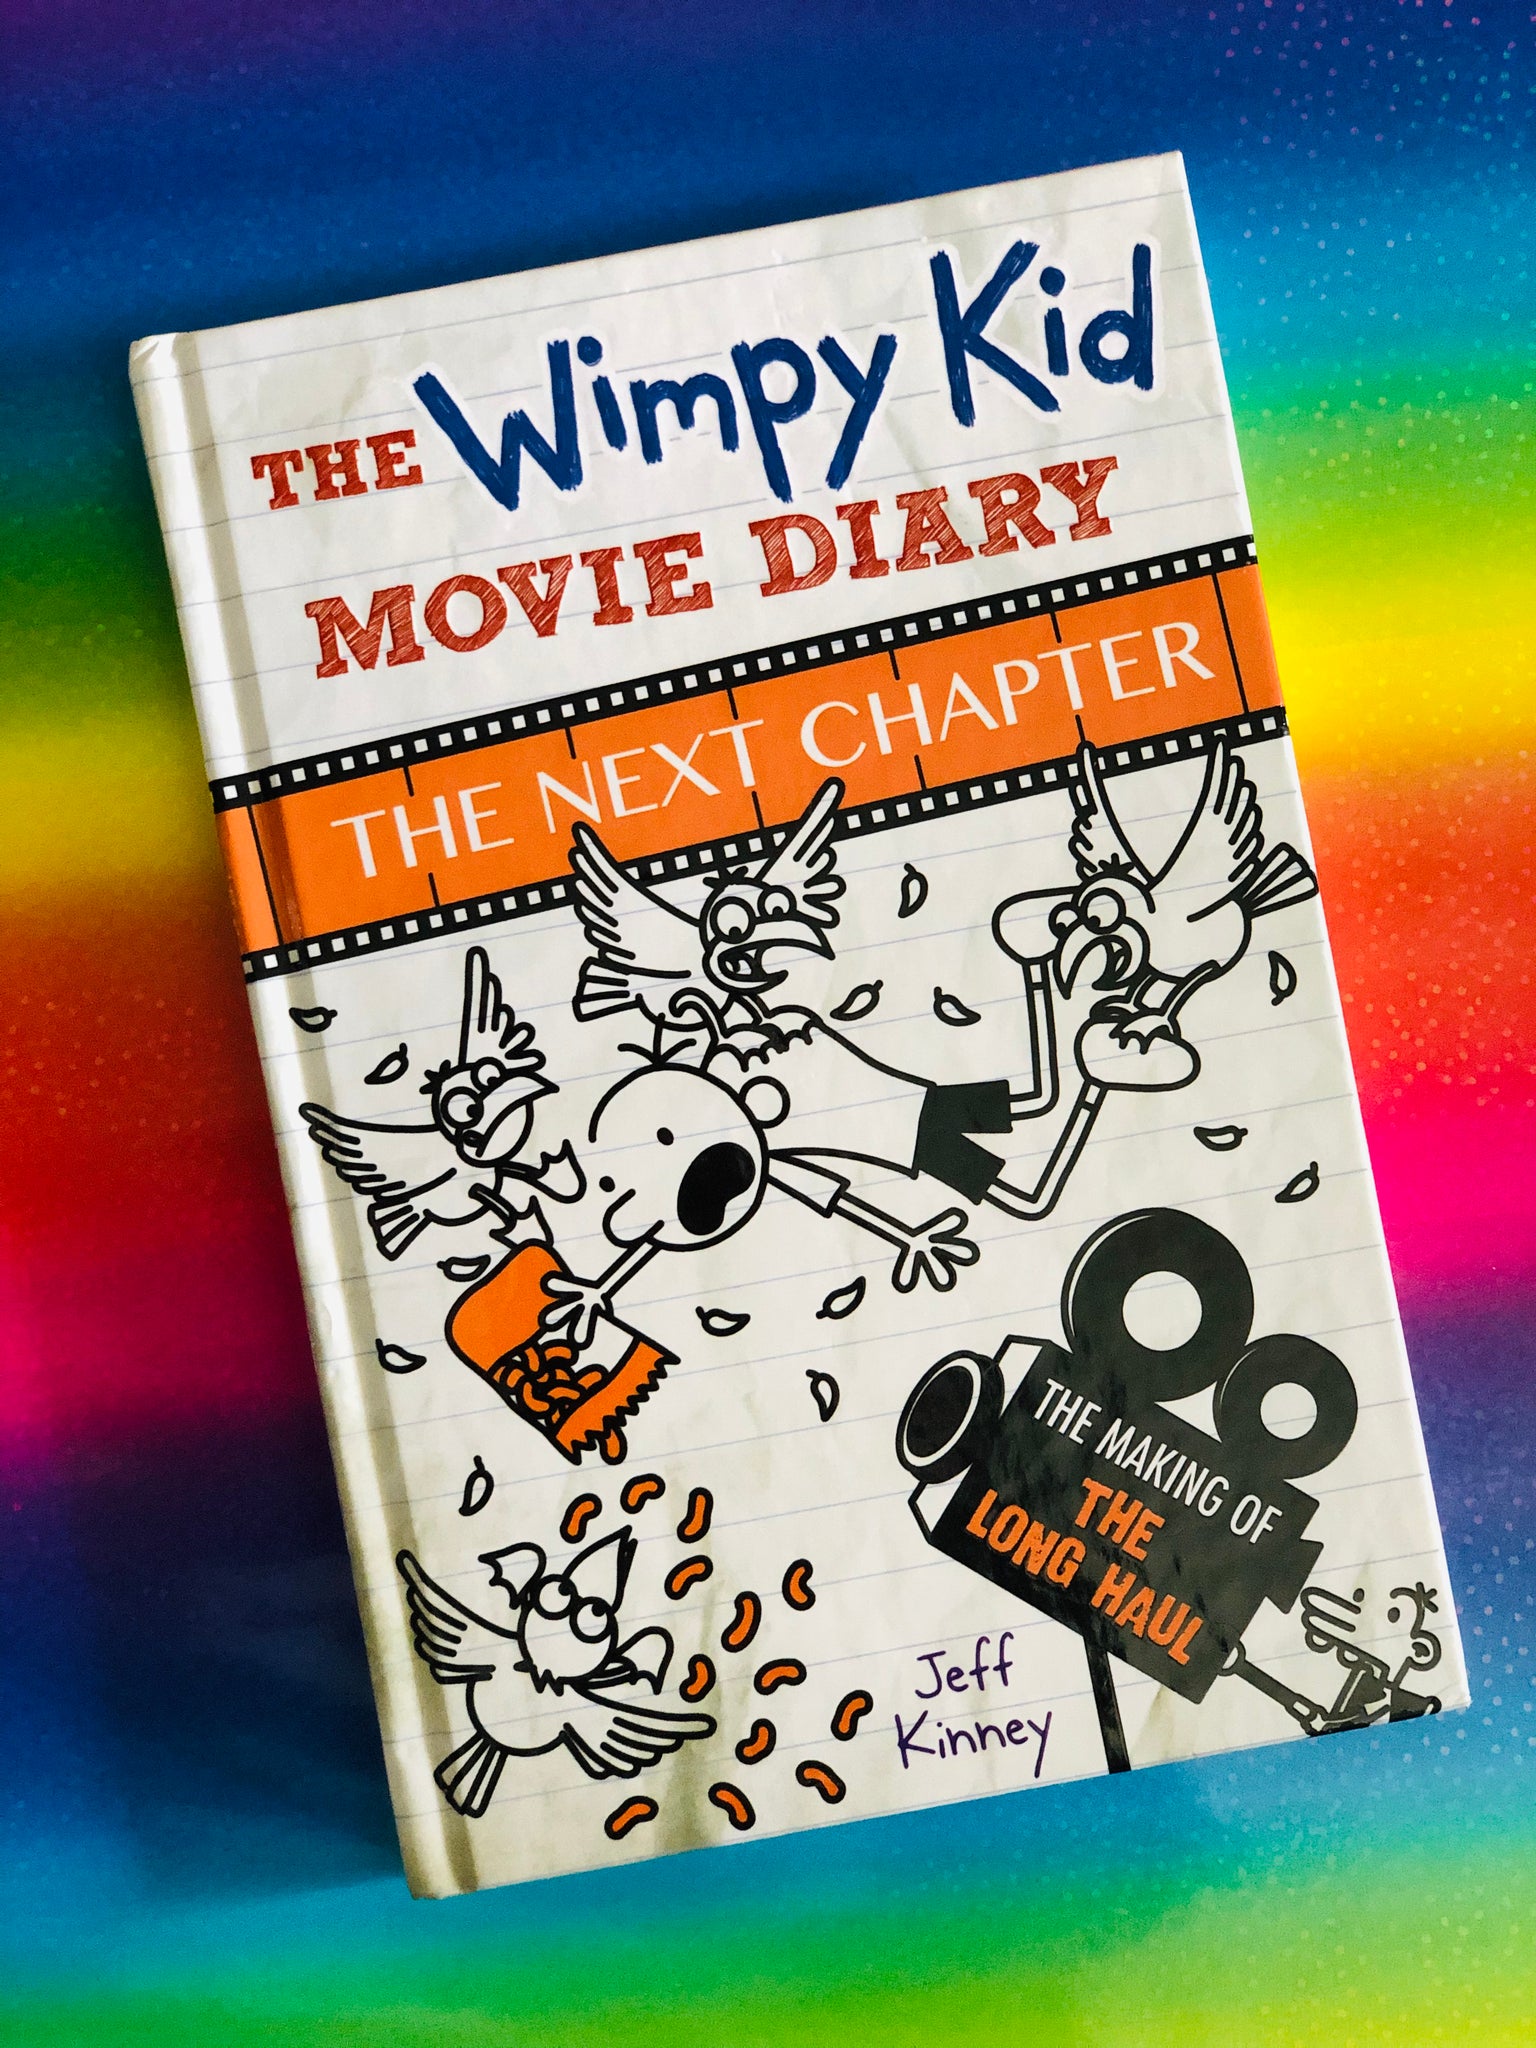 The Wimpy Kid Movie Diary (Diary of a Wimpy Kid) by Jeff Kinney